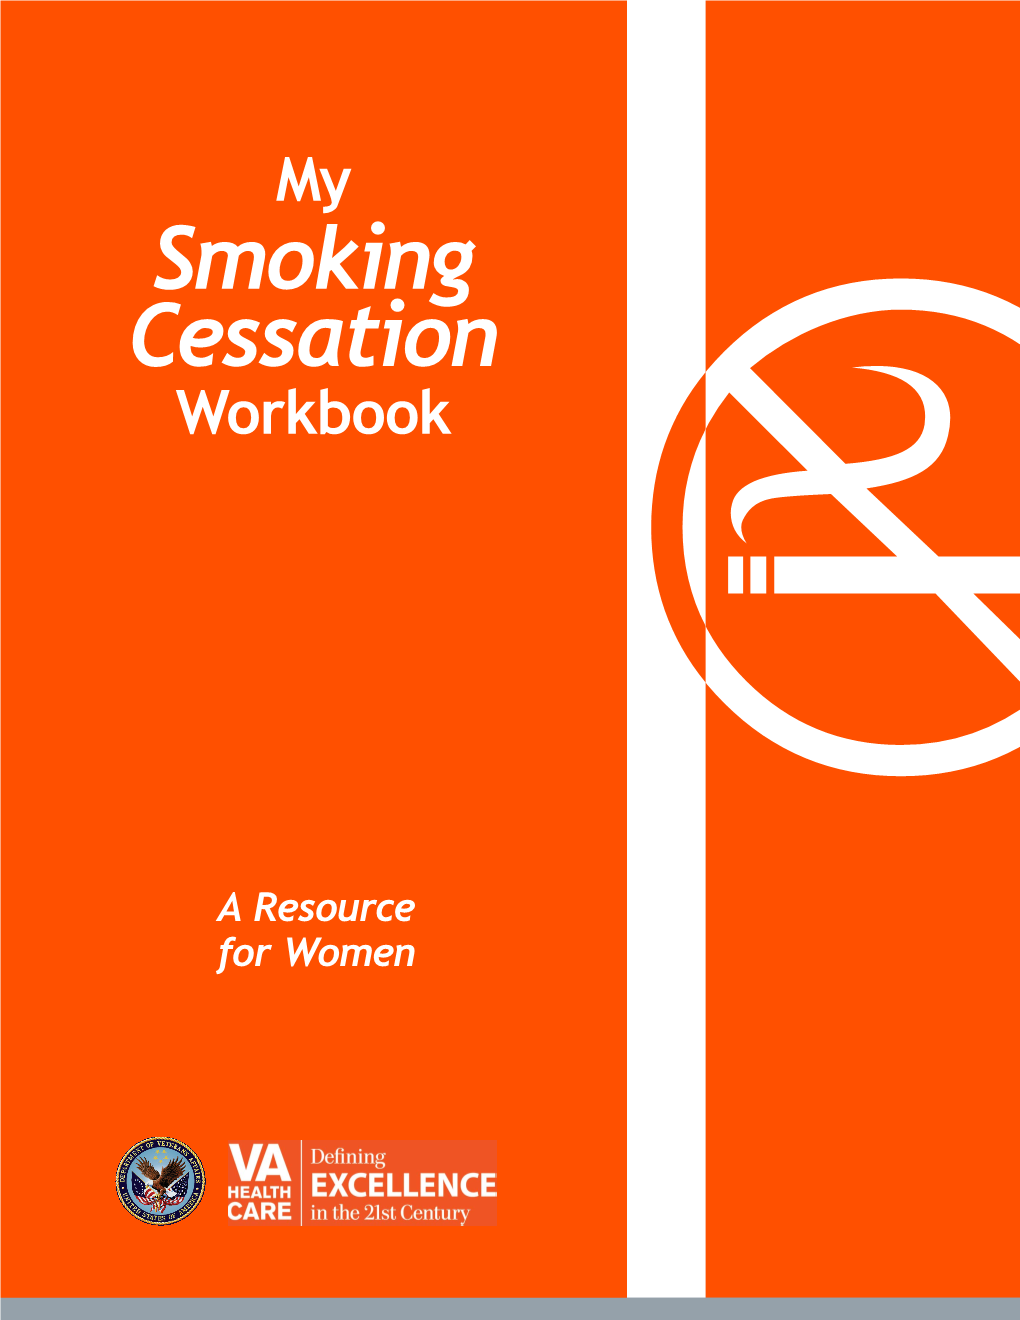 My Smoking Cessation Workbook: a Resource for Women Veterans Health Administration June 2014 Washington, DC 20420 IB 10-629; P96664